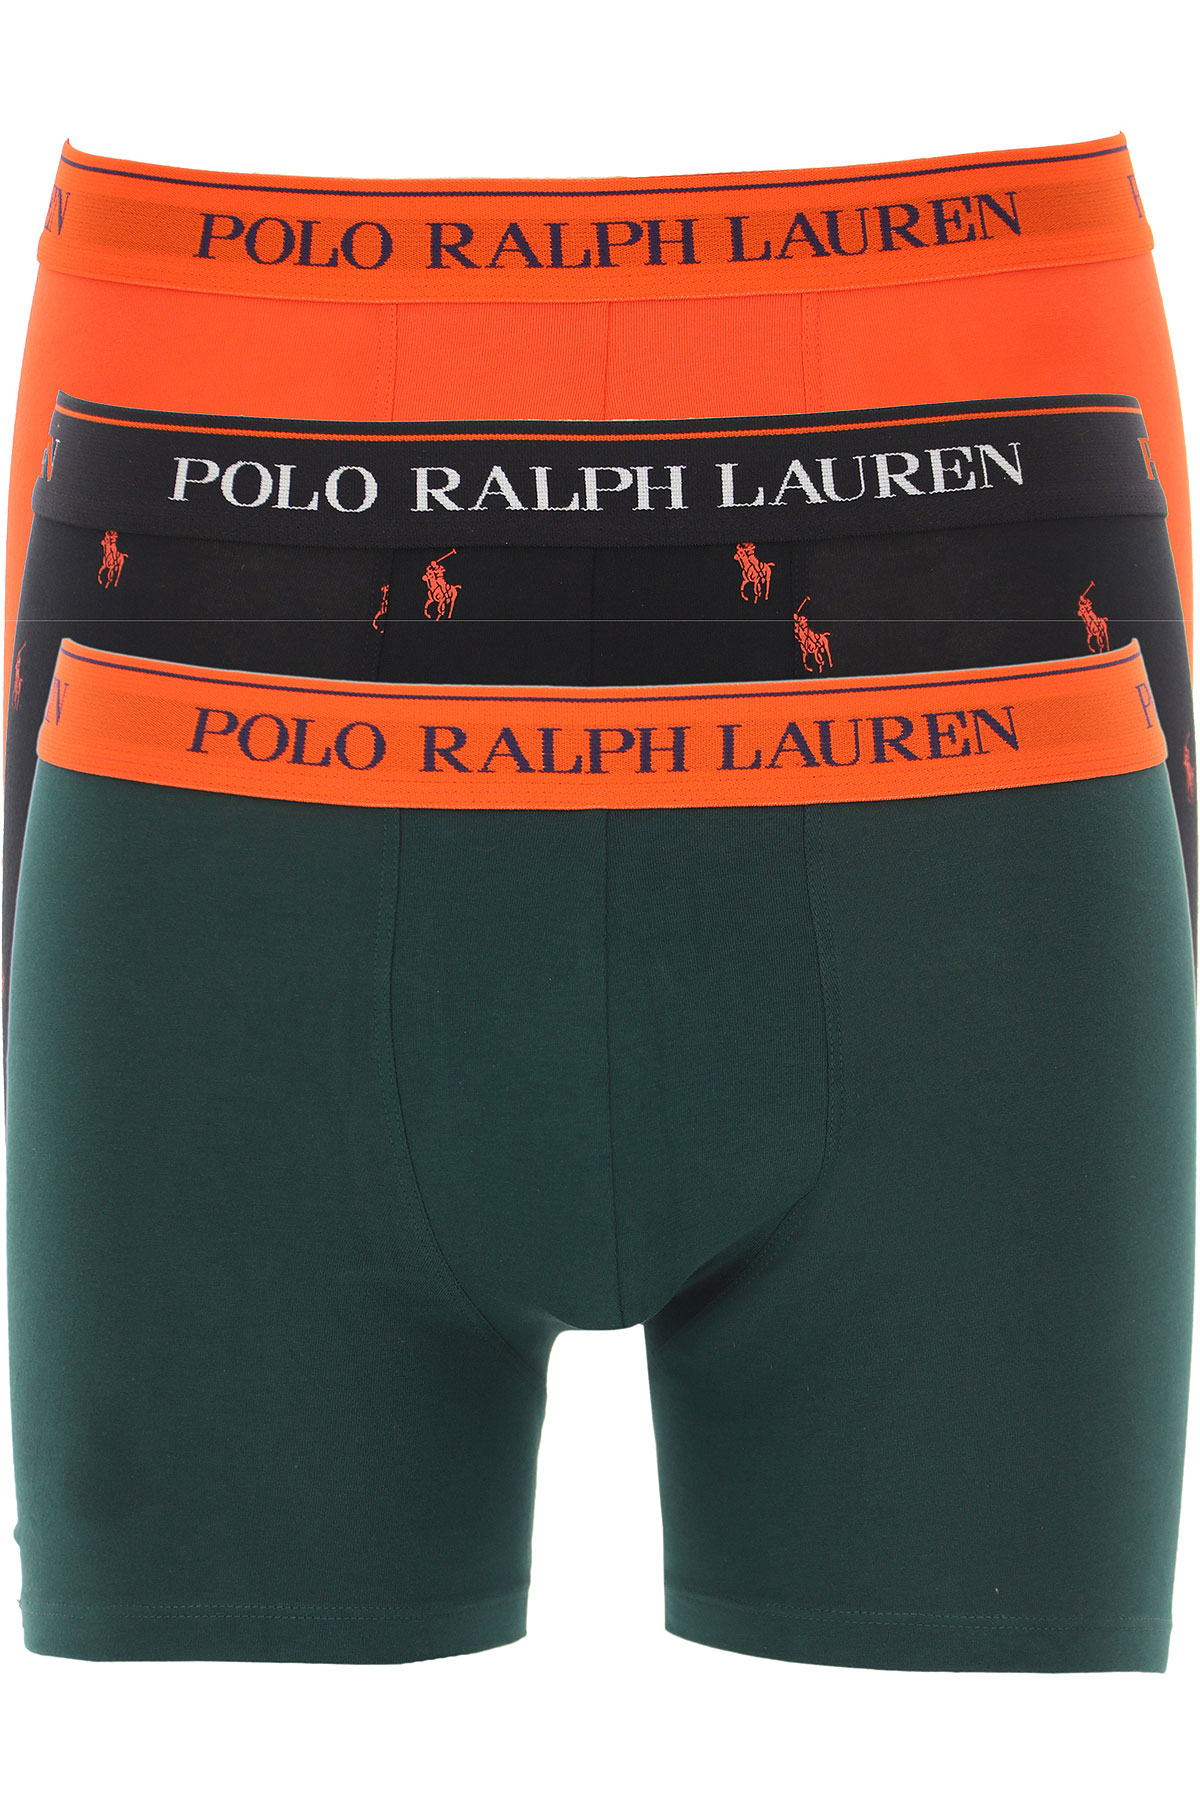 Mens Underwear Ralph Lauren, Style code: 714730410020--